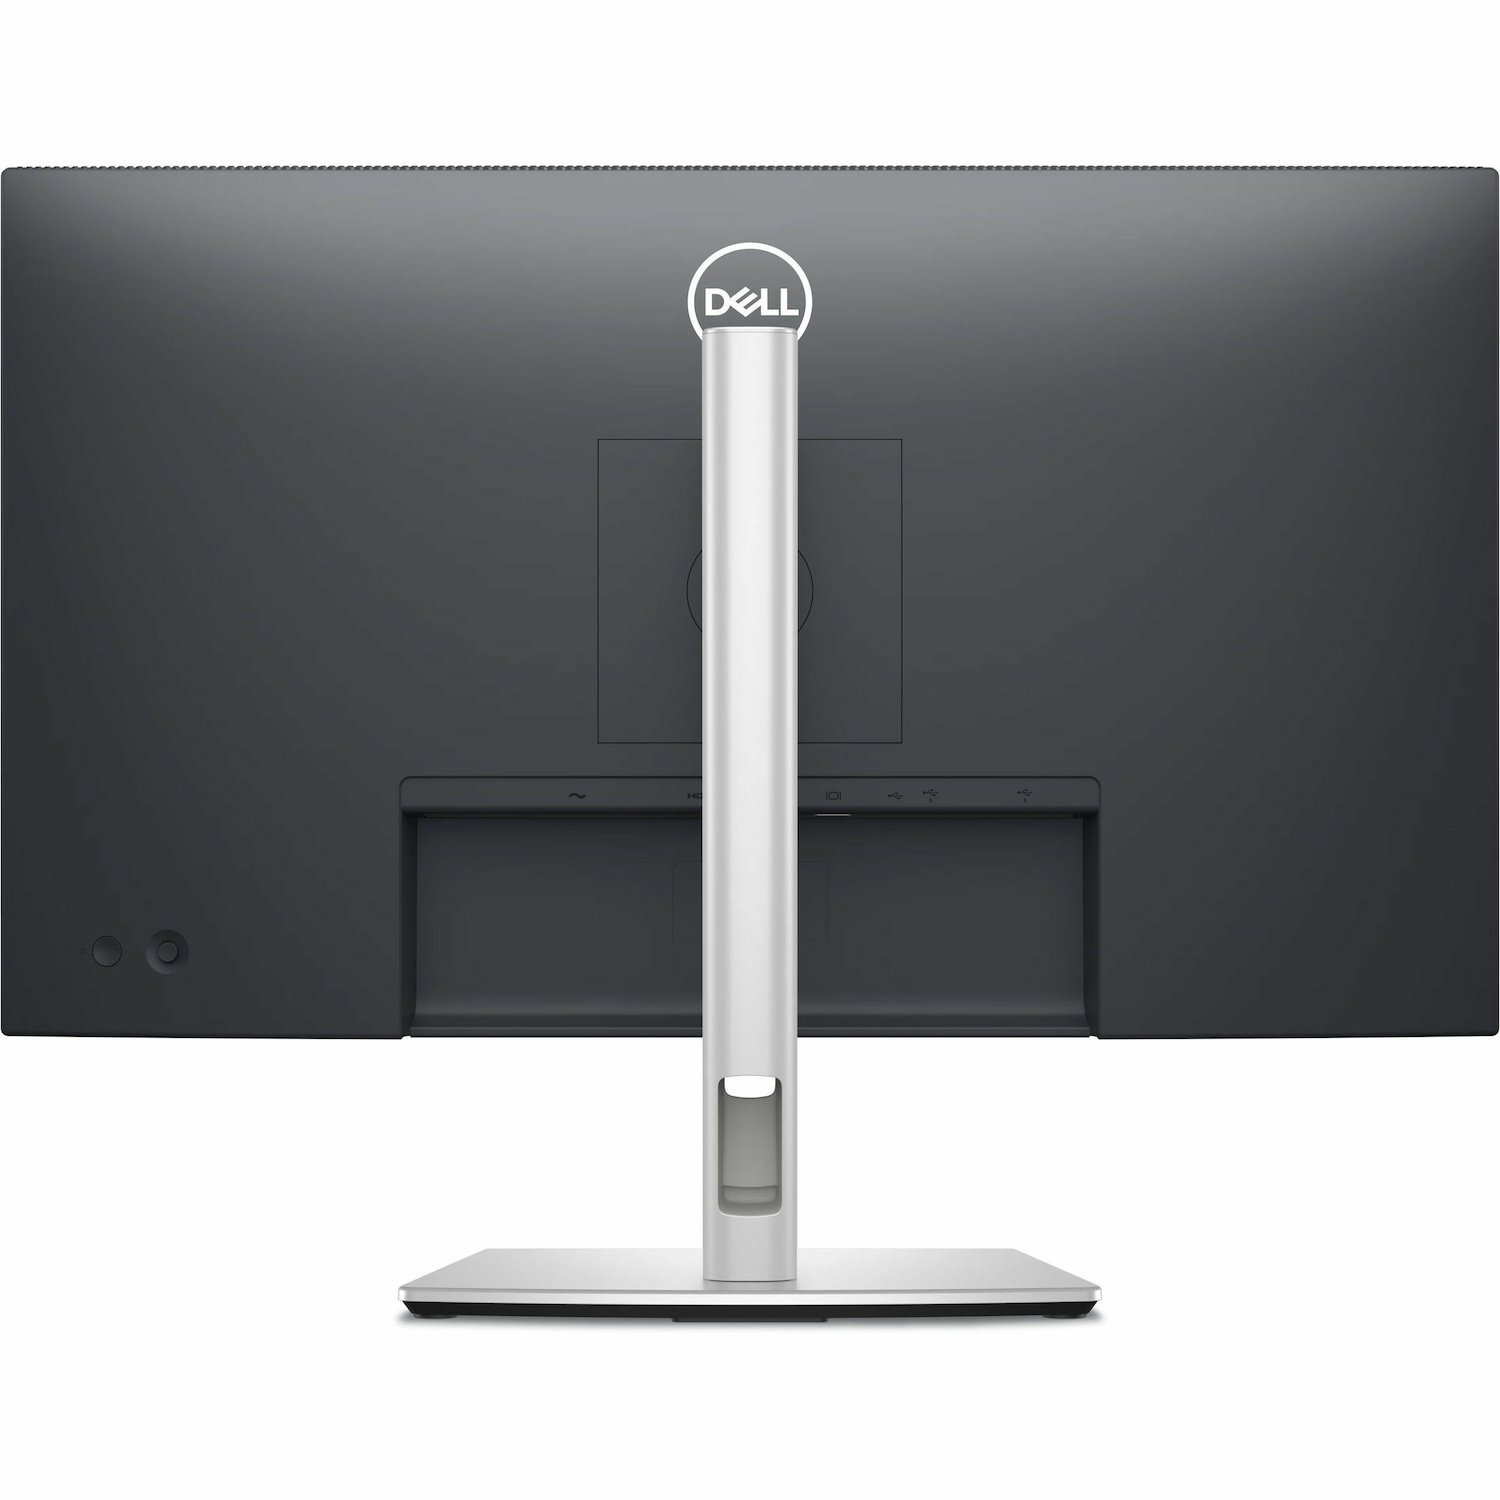 Dell P2725H 27" Class Full HD LED Monitor - 16:9 - Black, Silver